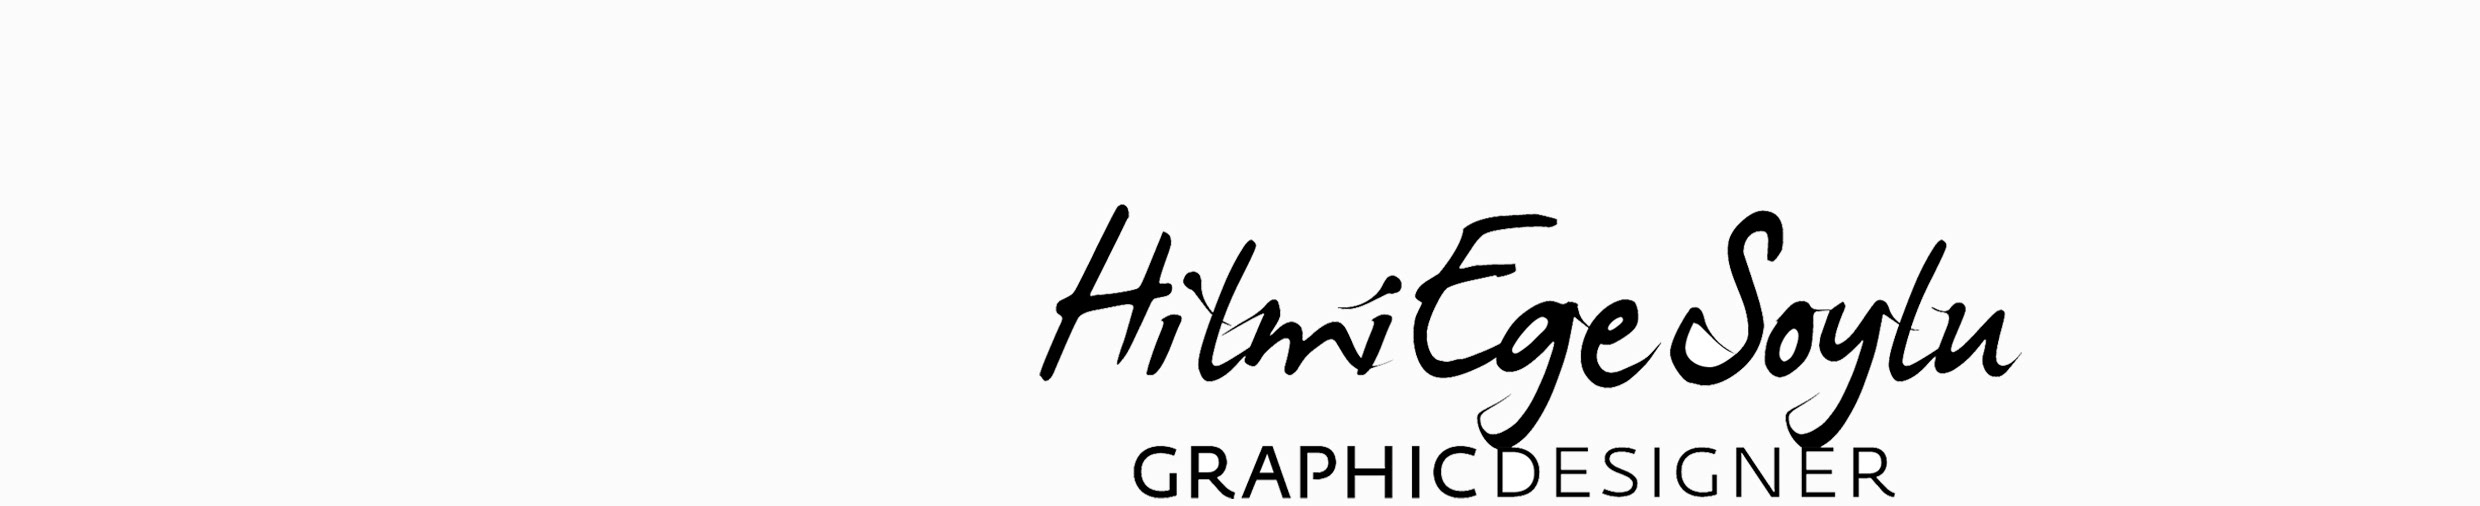 Hilmi Ege SOYLU's profile banner